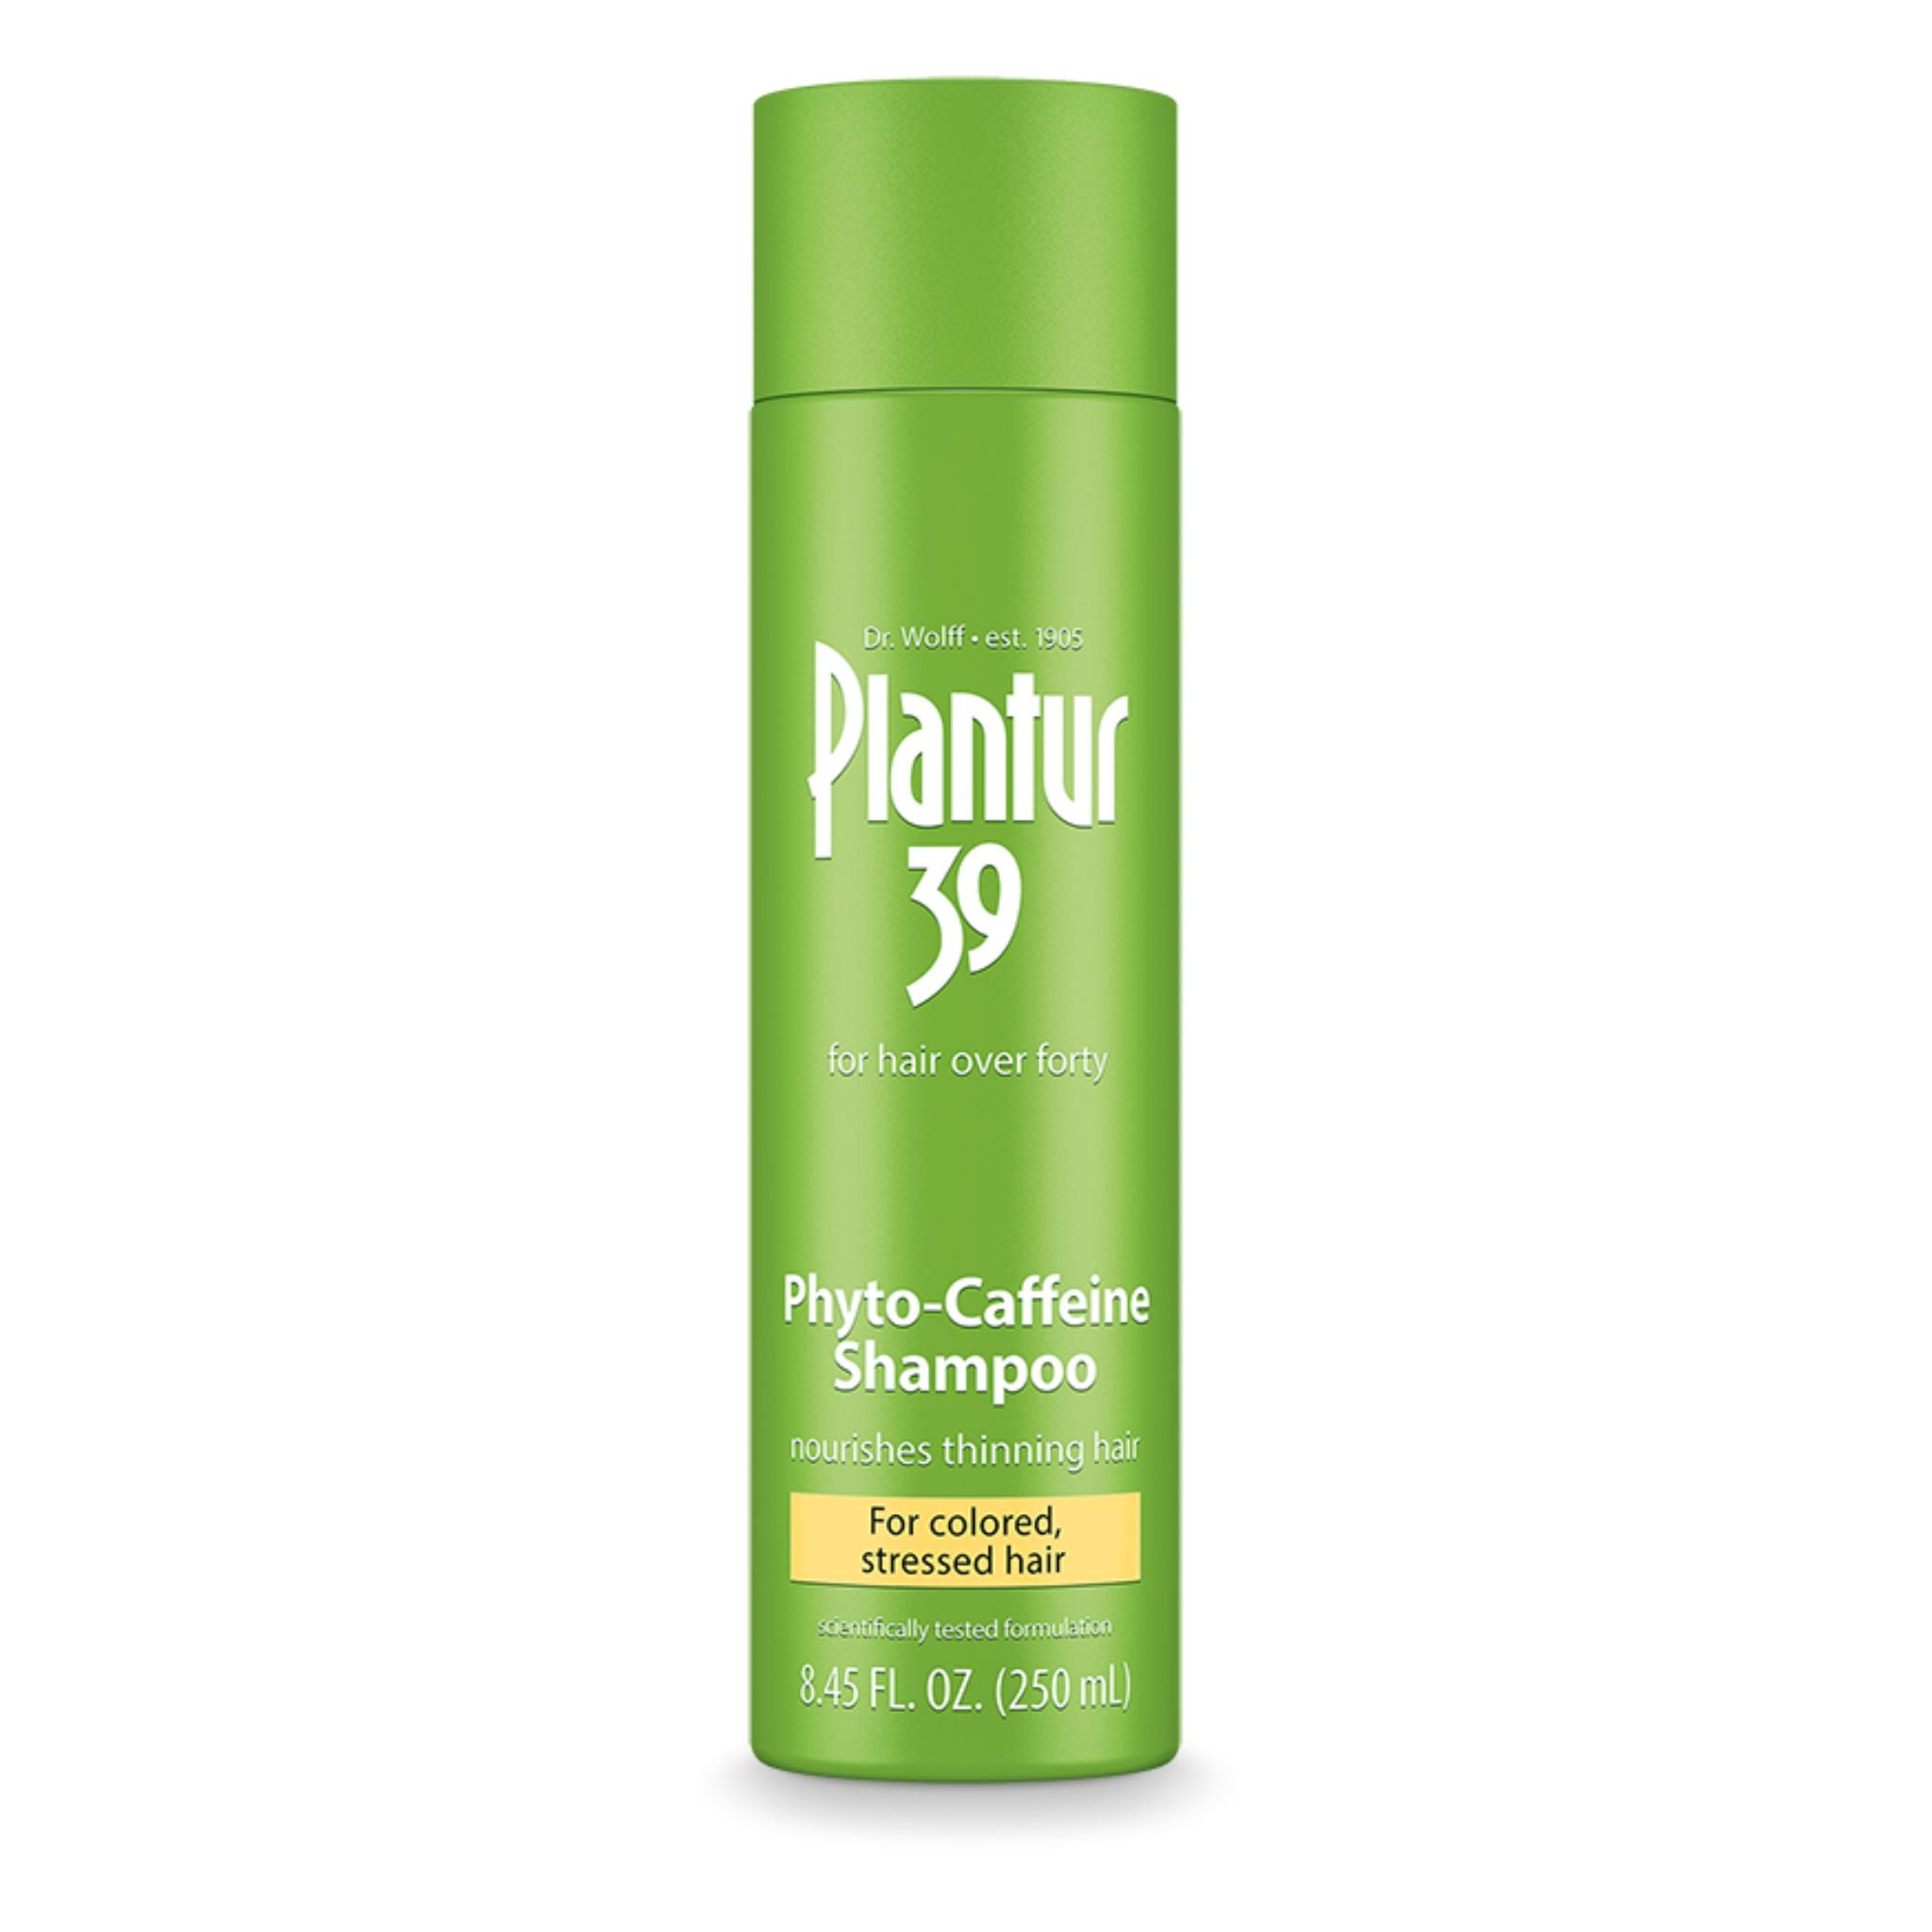 Plantur 39 Phyto-Caffeine Shampoo for Colored, Stressed Hair